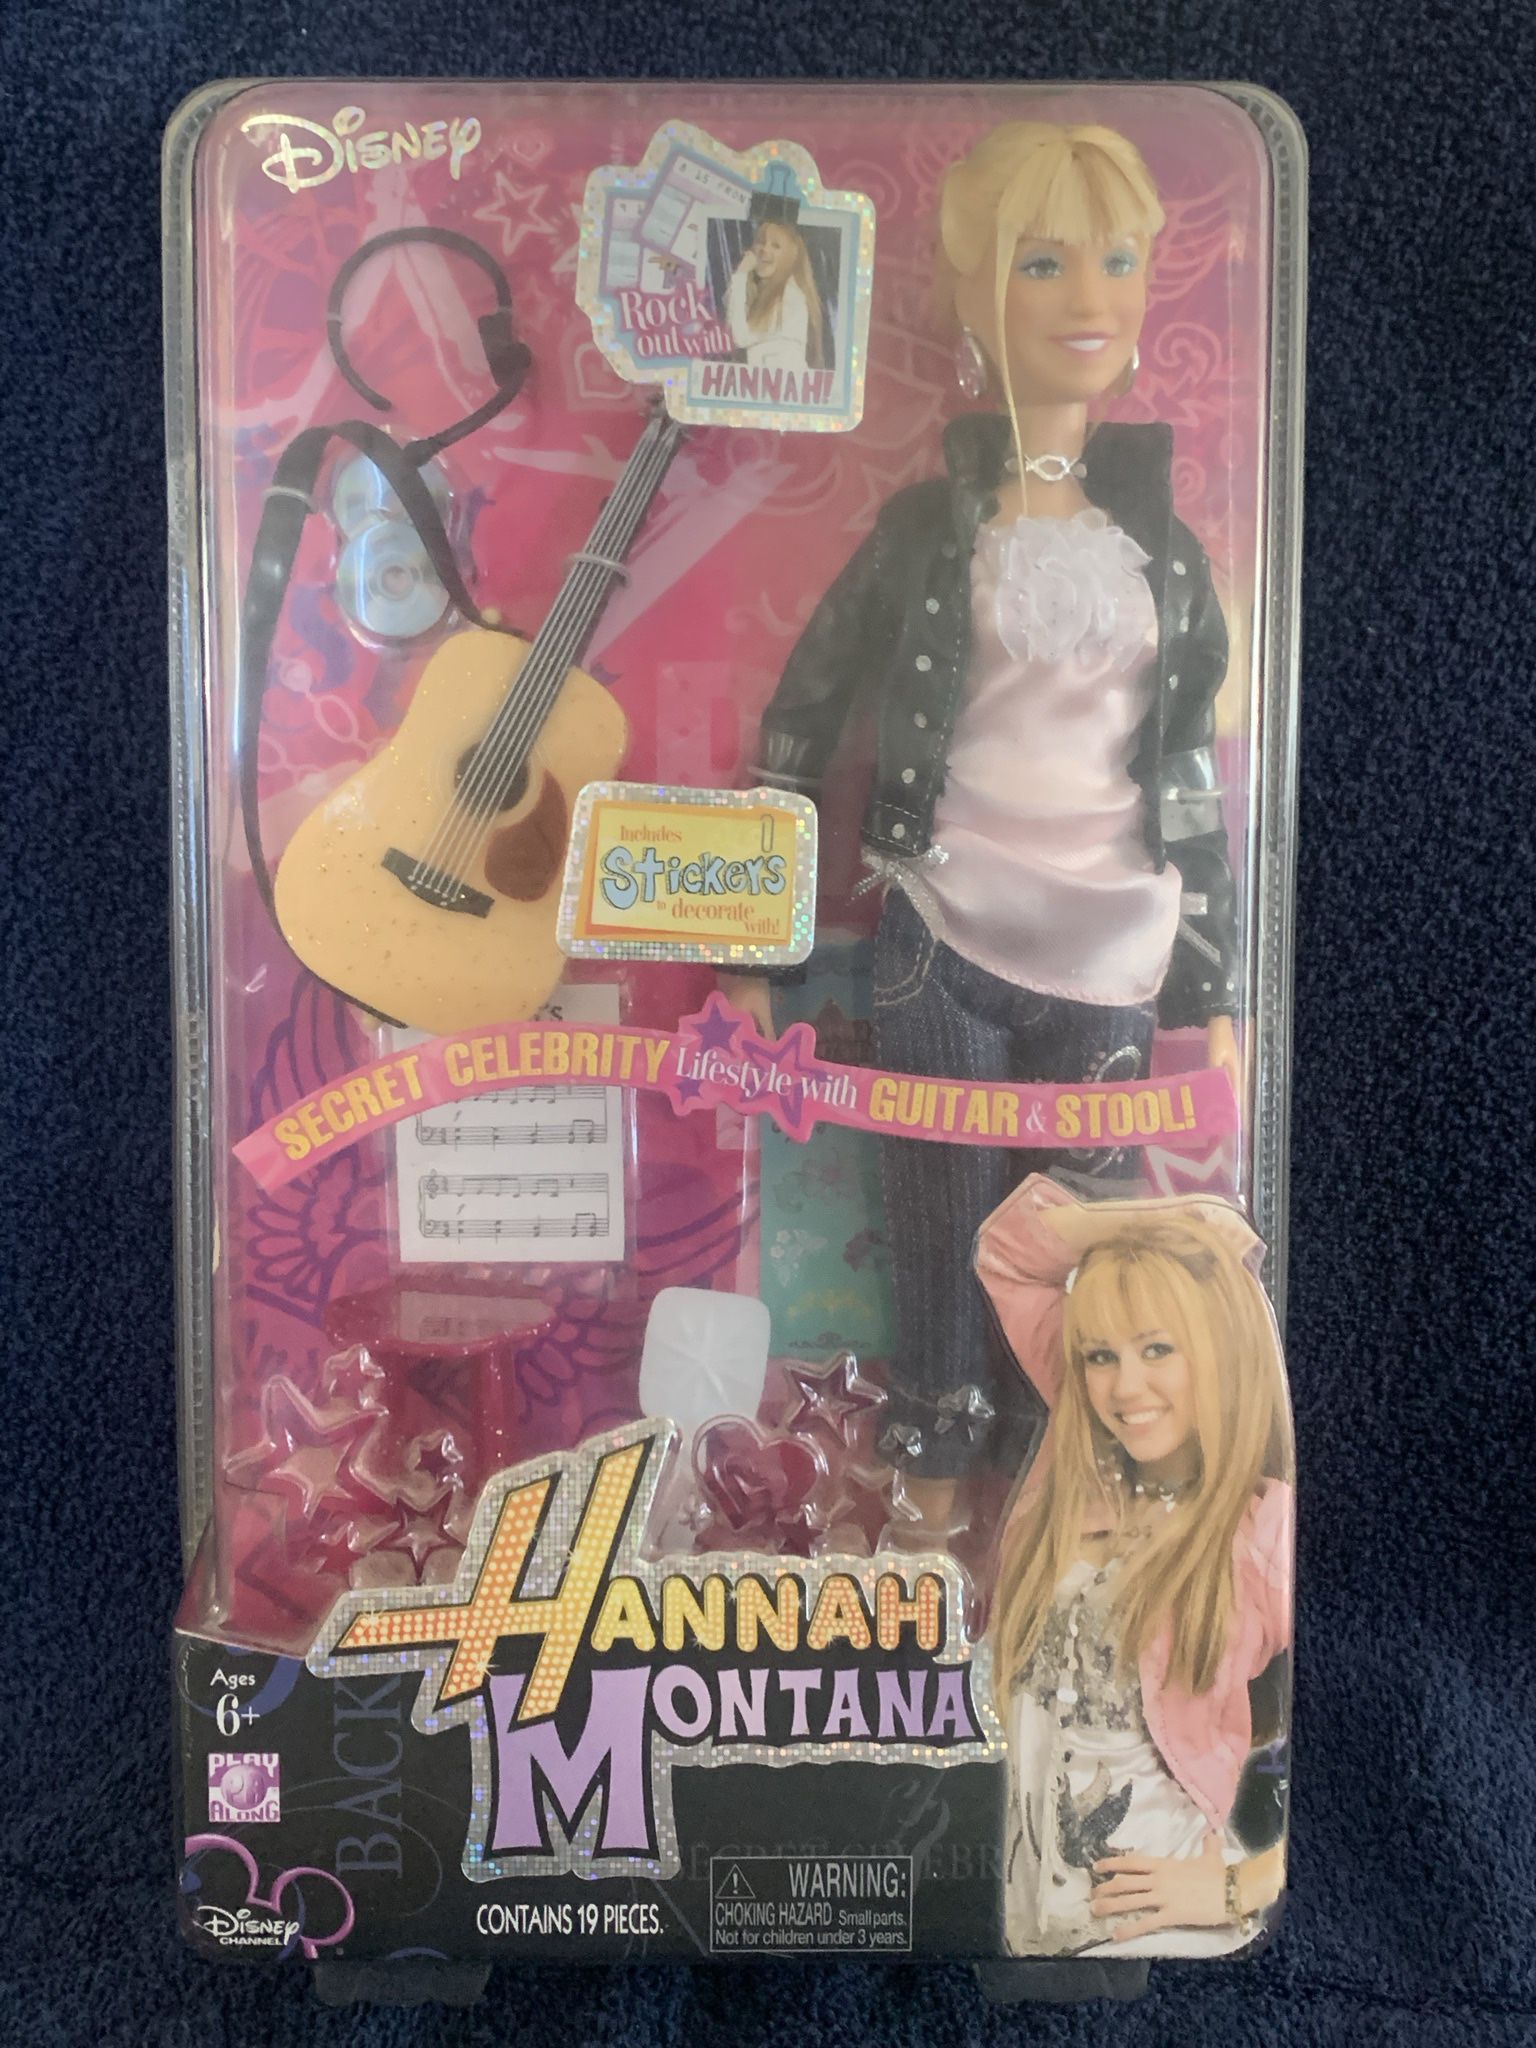 Brand New Disney Hannah Montana Secret Celebrity Lifestyle with Guitar & Stool Doll